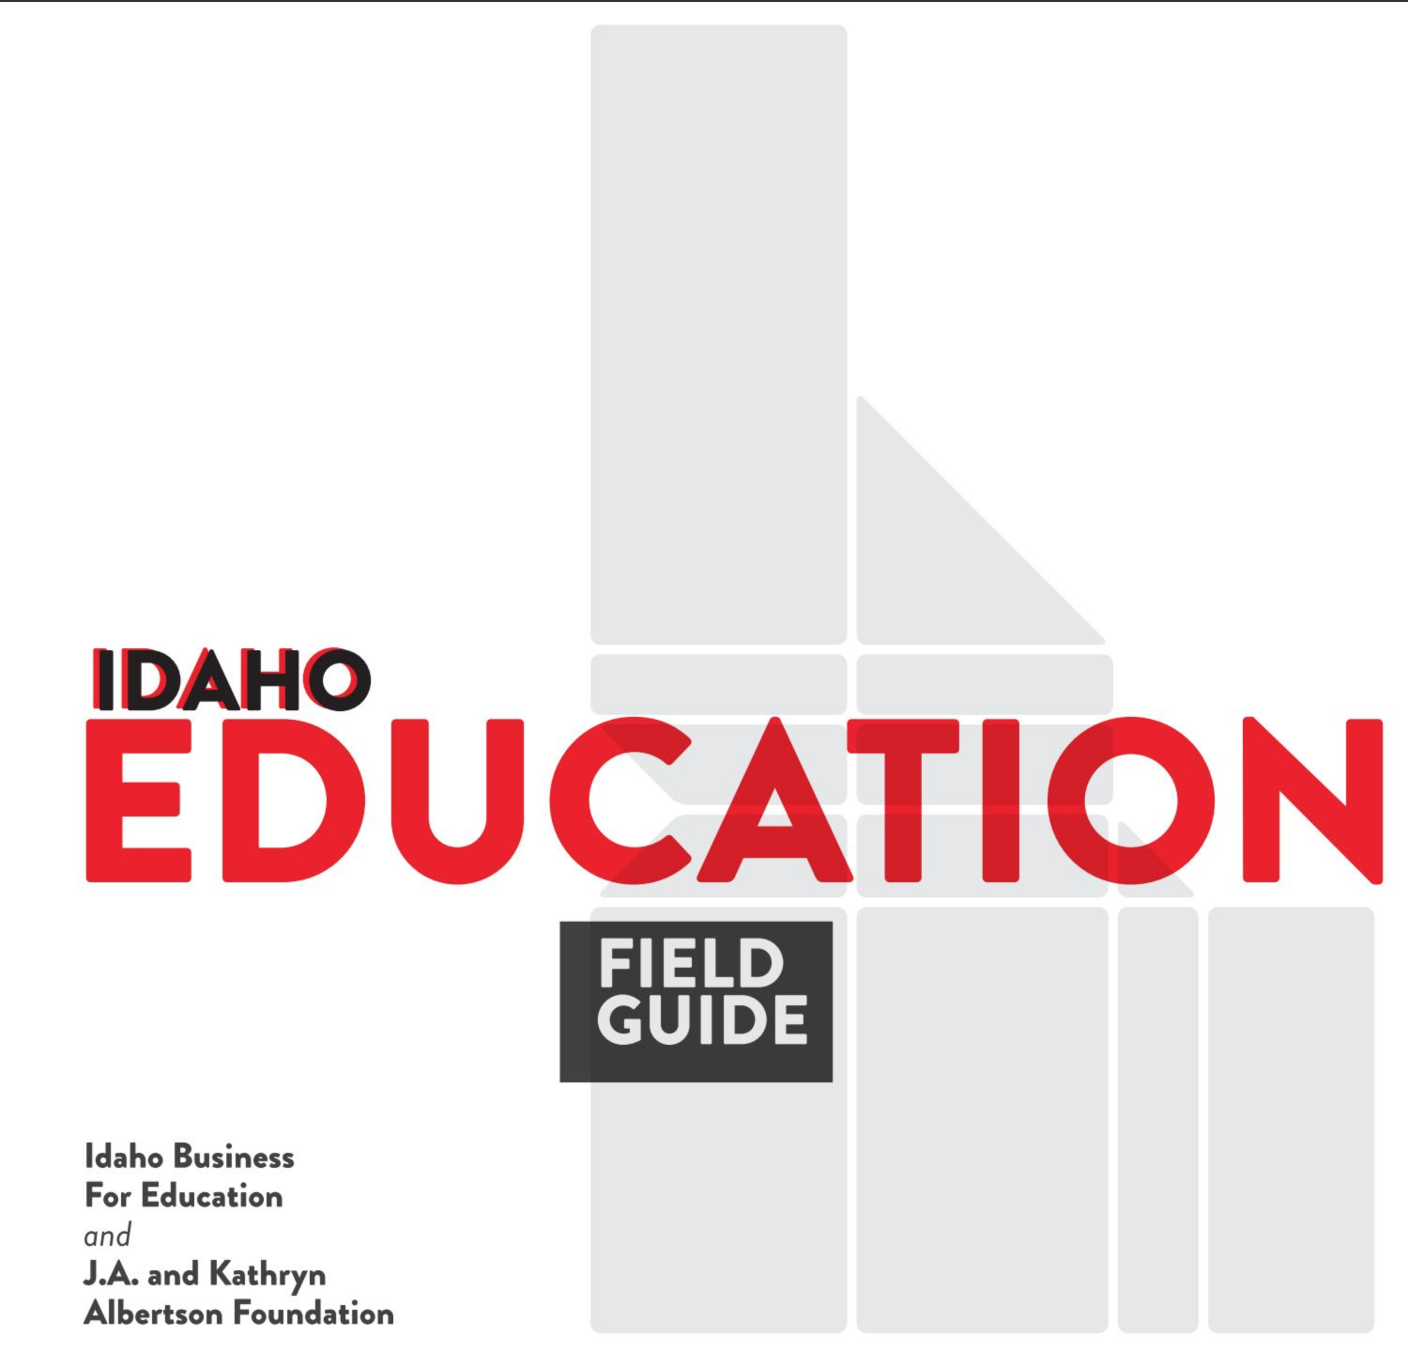 Idaho Education Field Guide 2016